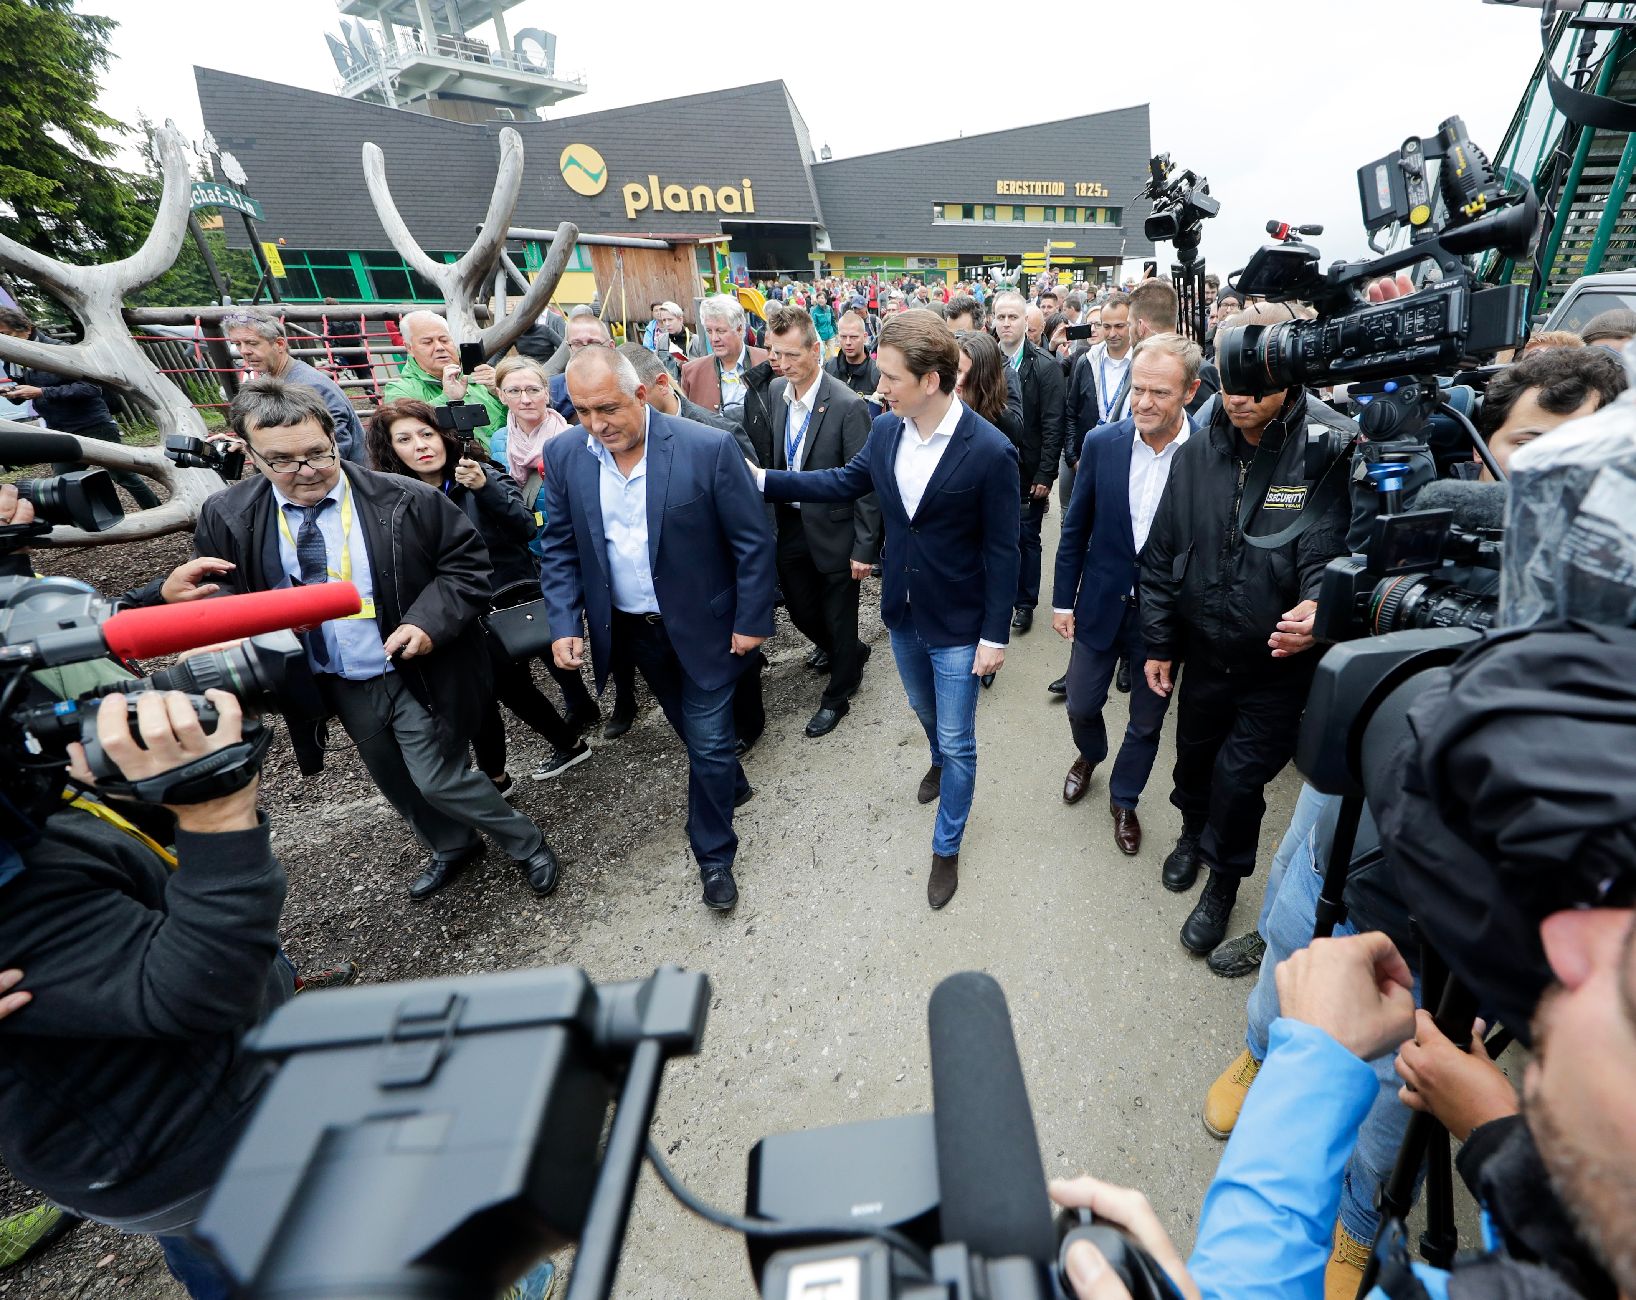 Arrival of Federal Chancellor Sebastian Kurz, Prime Minister Boyko Borissov and European Council President Donald Tusk at the top of the Planai mountain